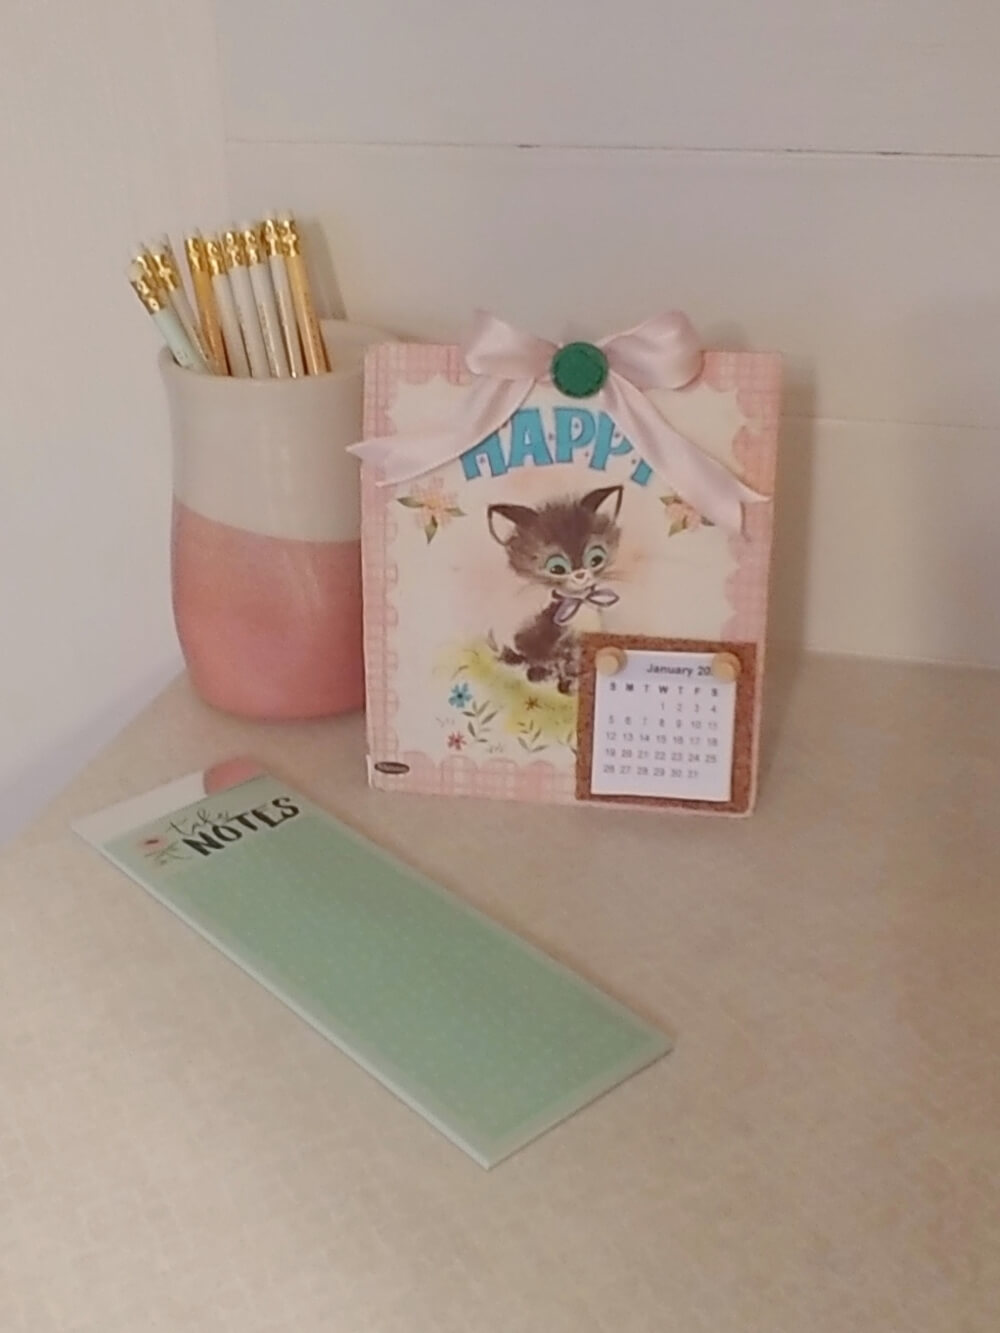 Upcycled Children's Book Calendar